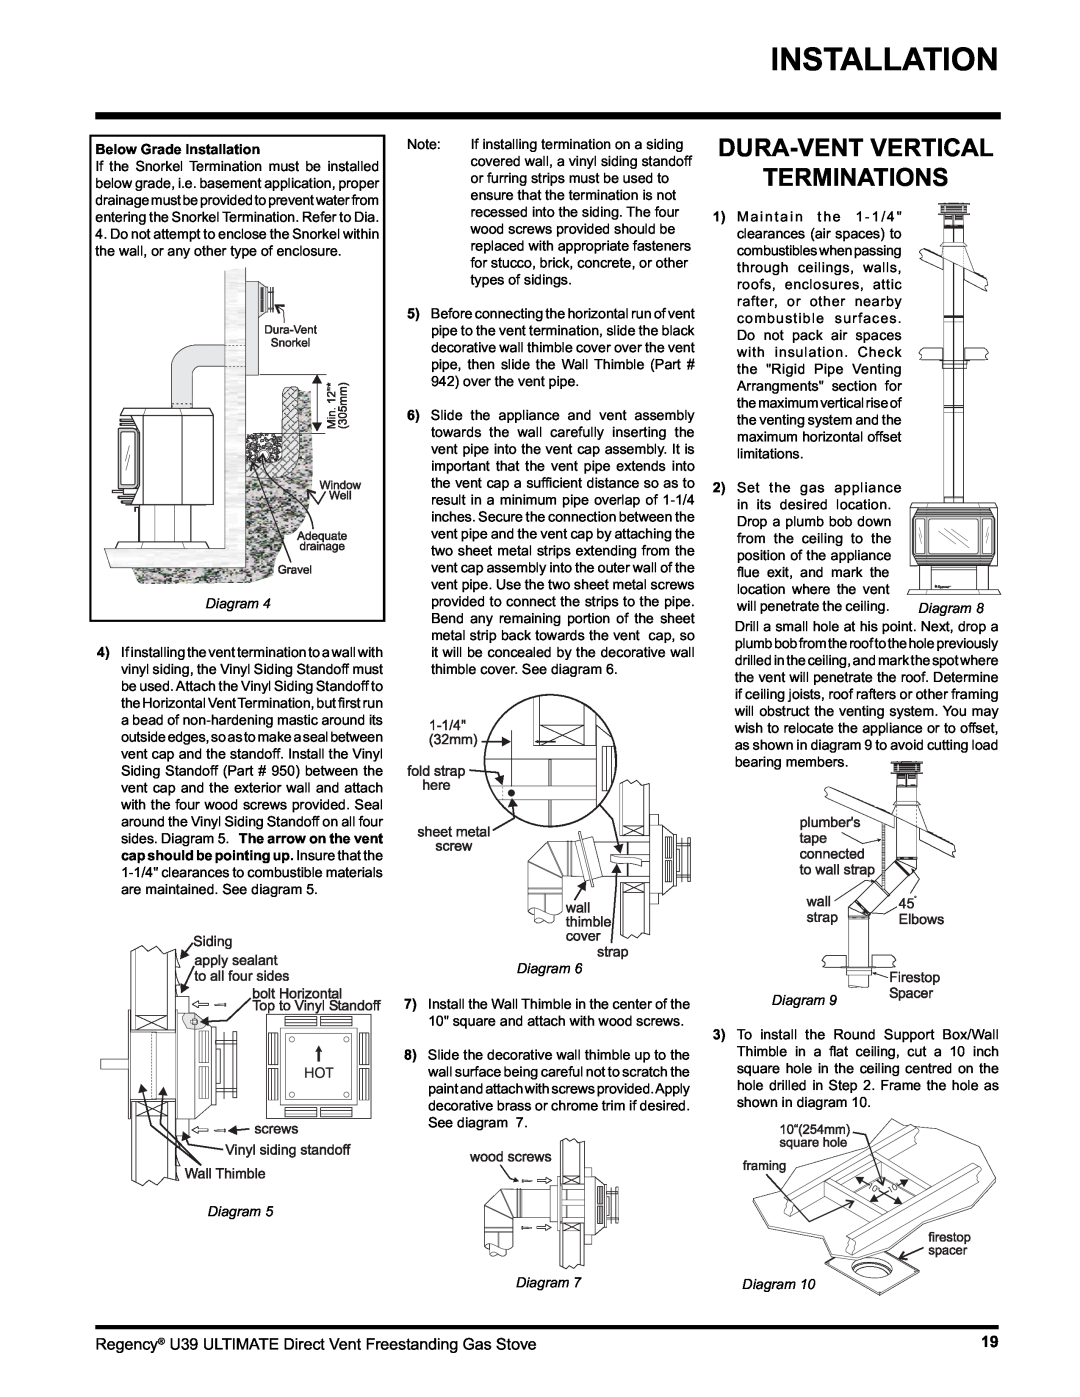 Regency U39-NG1, U39-LP1 installation manual Dura-Ventvertical Terminations, Below Grade Installation, Diagram 